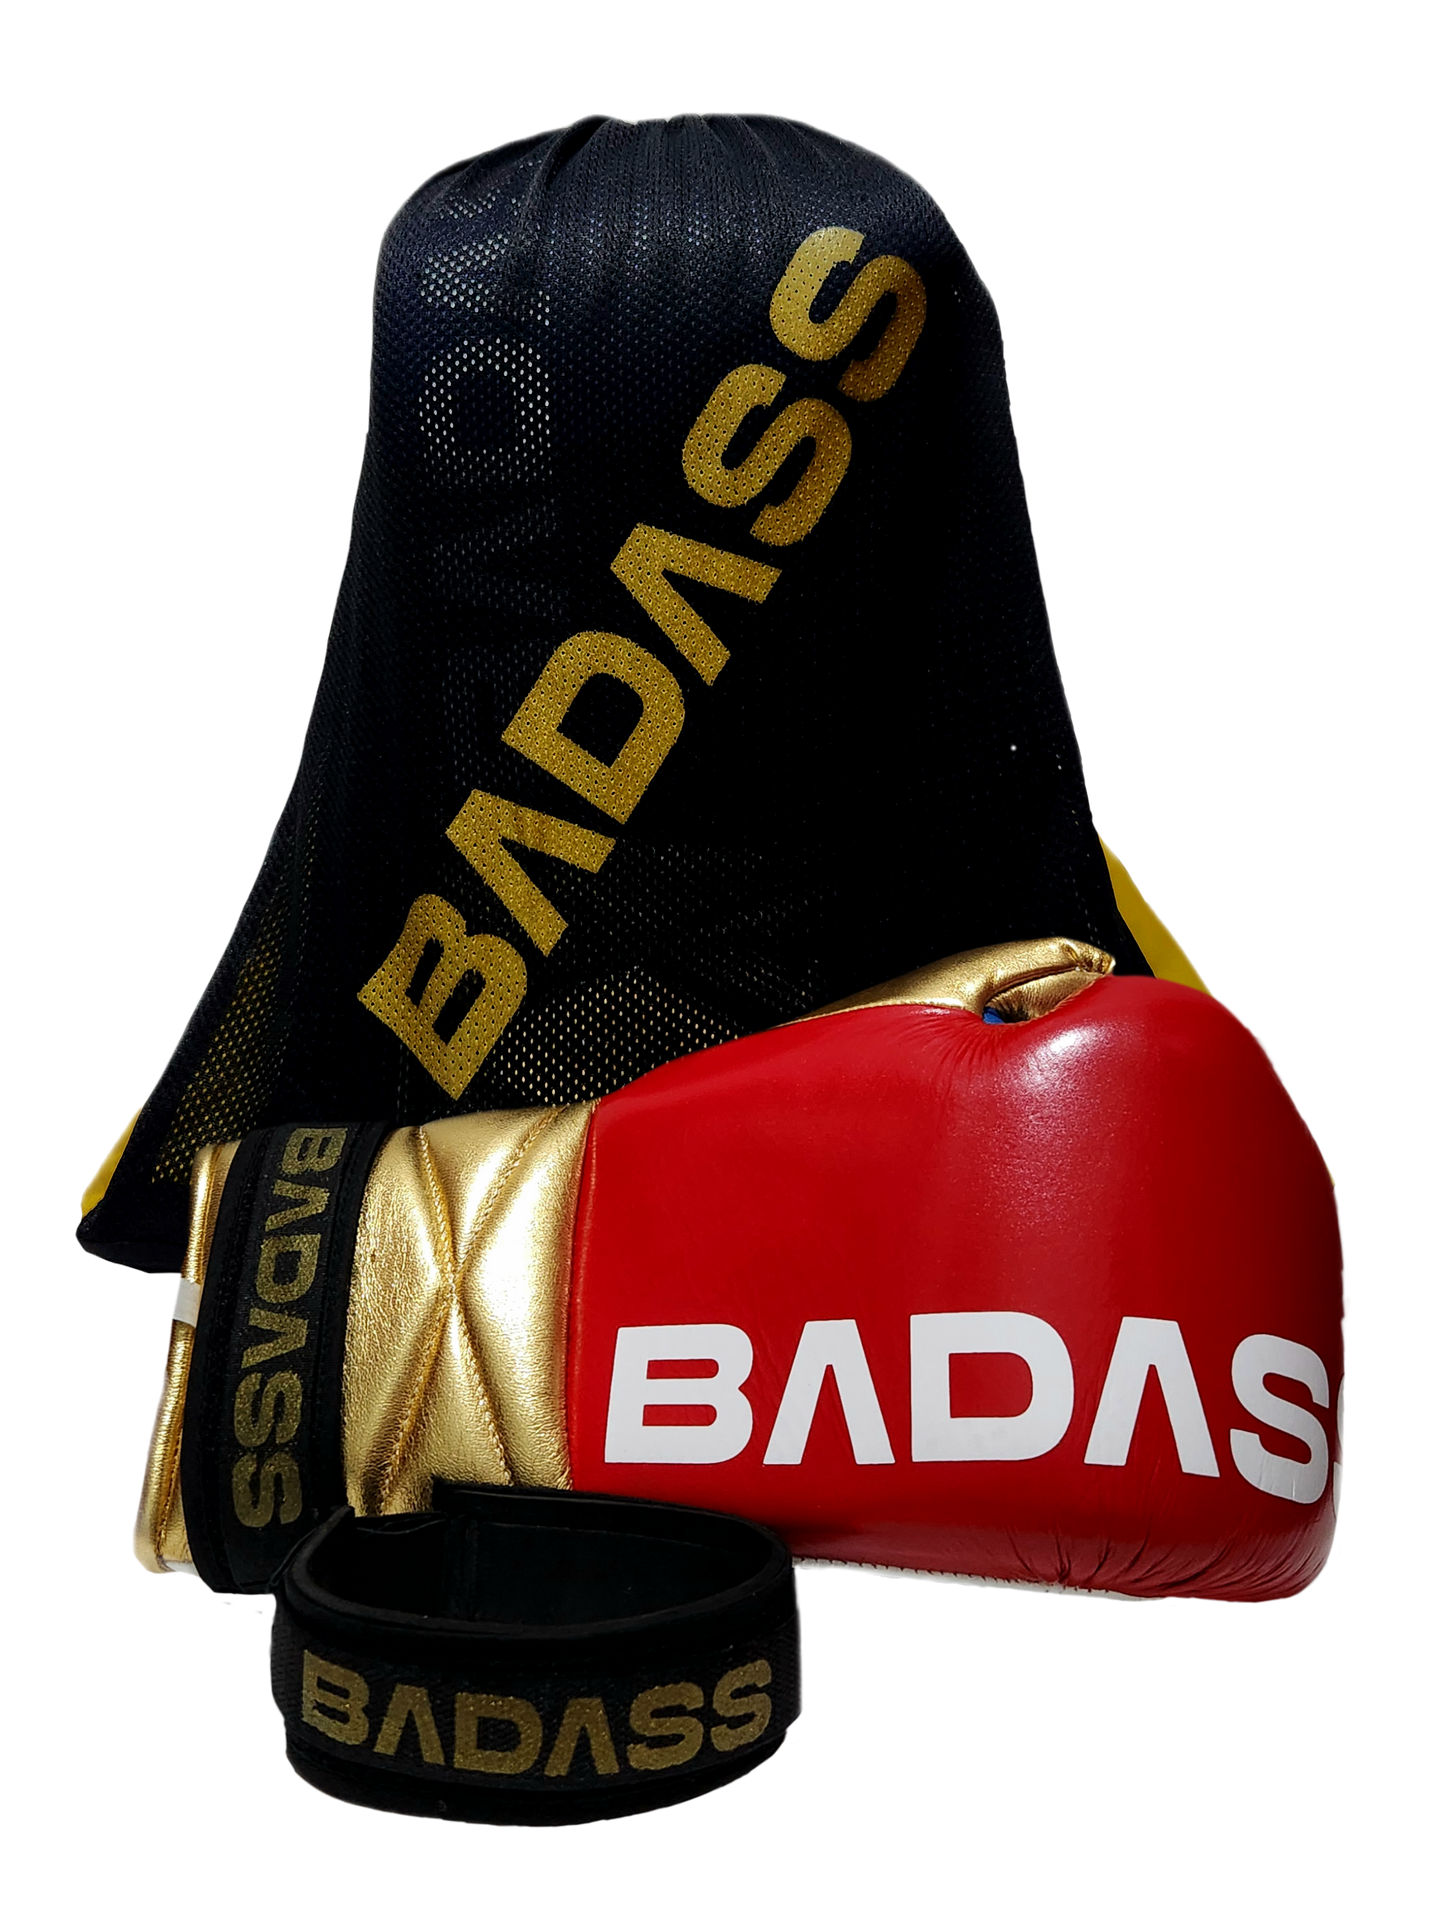 No Corner Badass Boxing Gloves